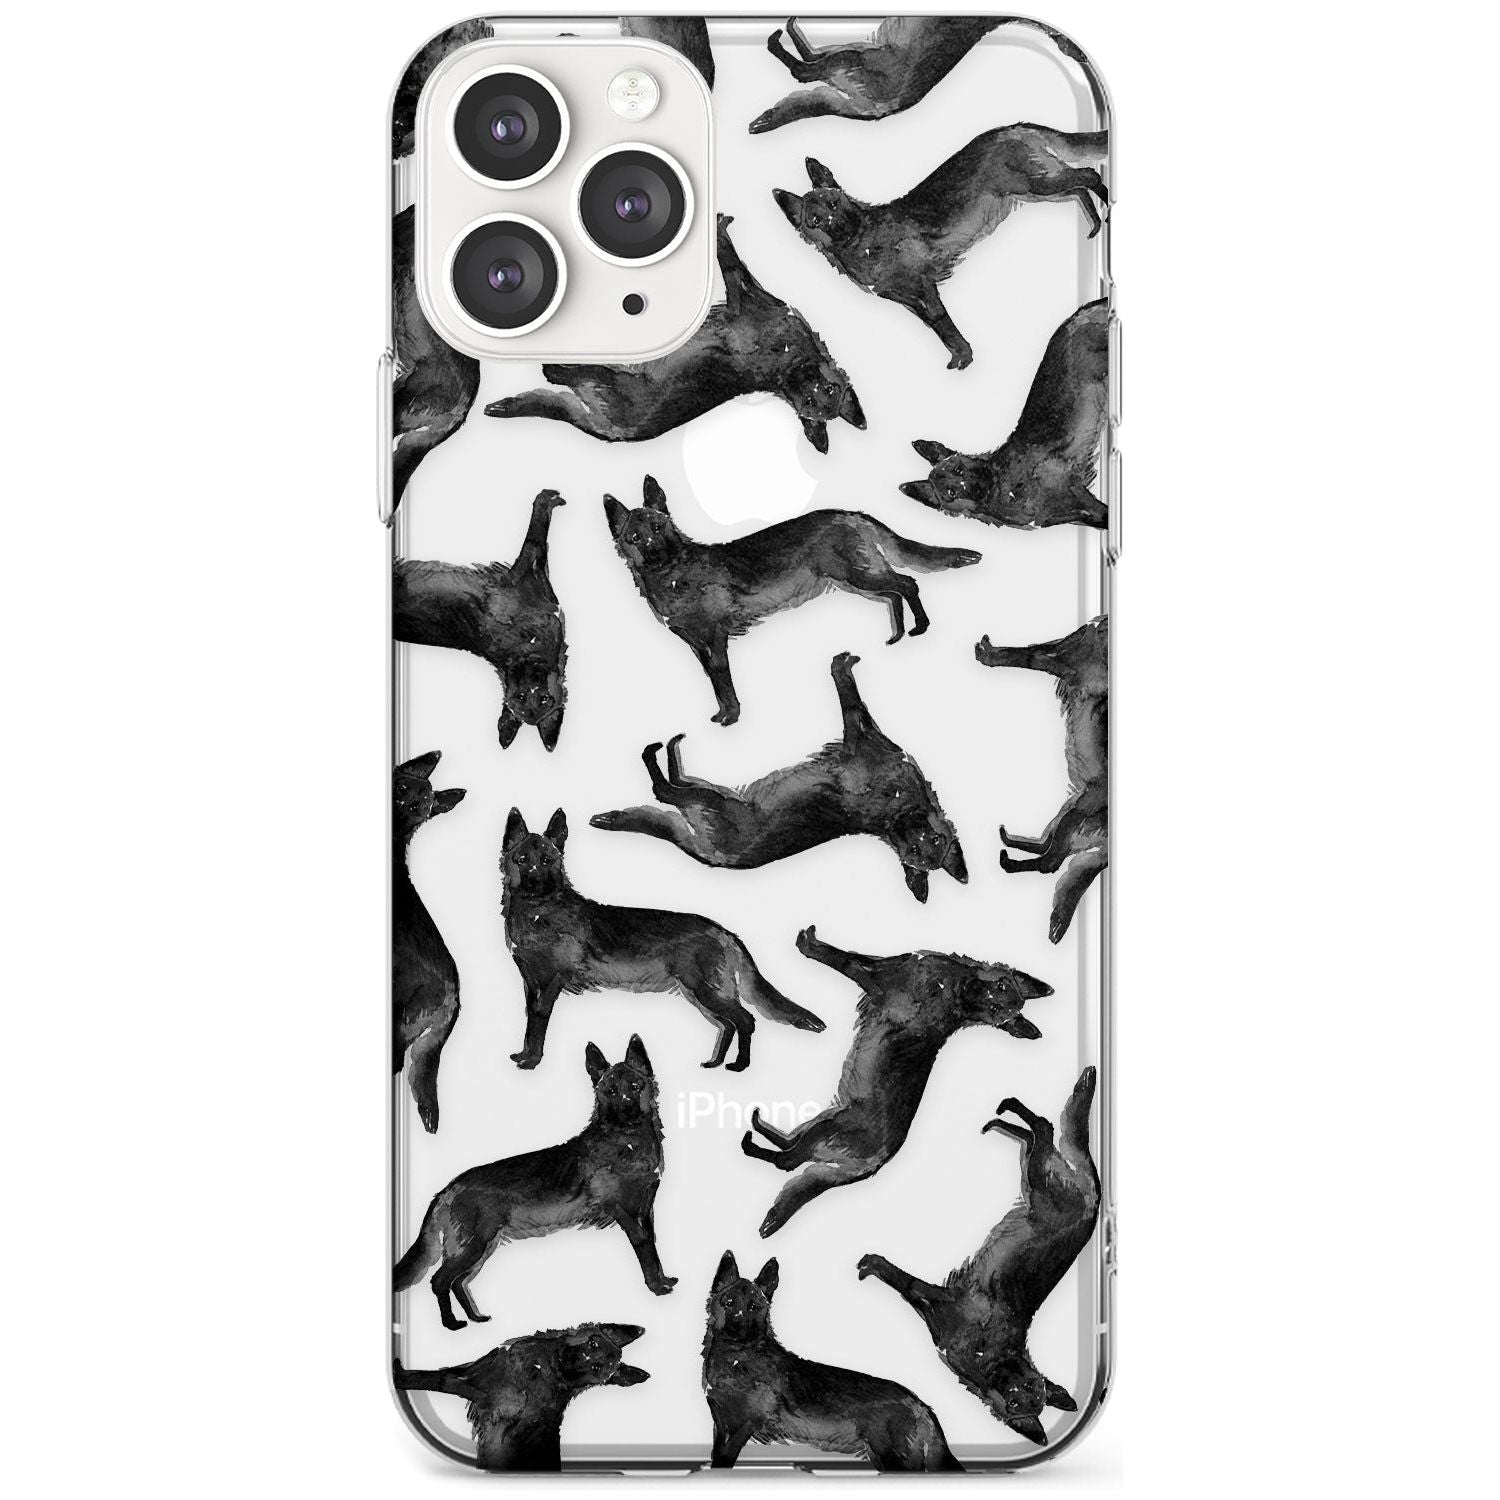 German Shepherd (Black) Watercolour Dog Pattern Slim TPU Phone Case for iPhone 11 Pro Max